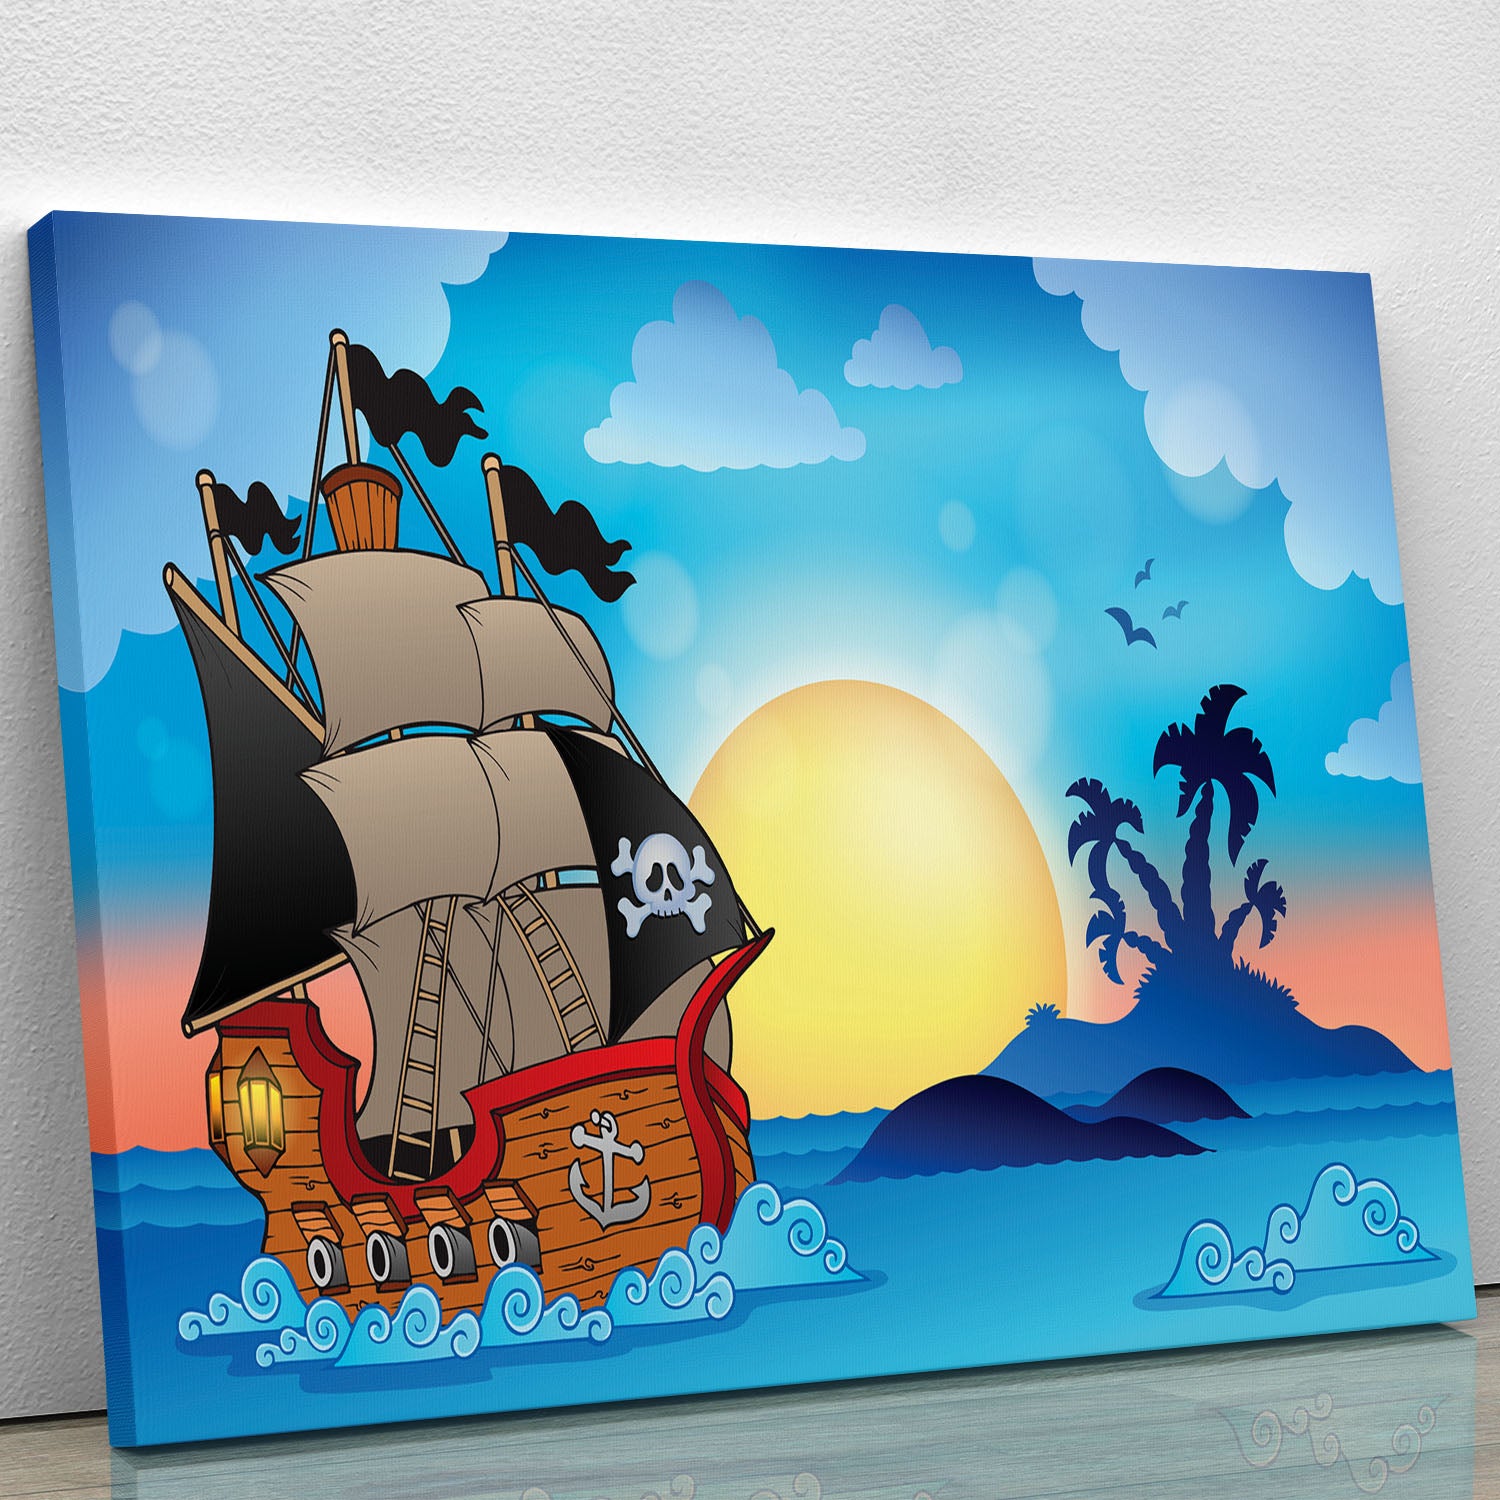 Pirate ship near small island Canvas Print or Poster - Canvas Art Rocks - 1